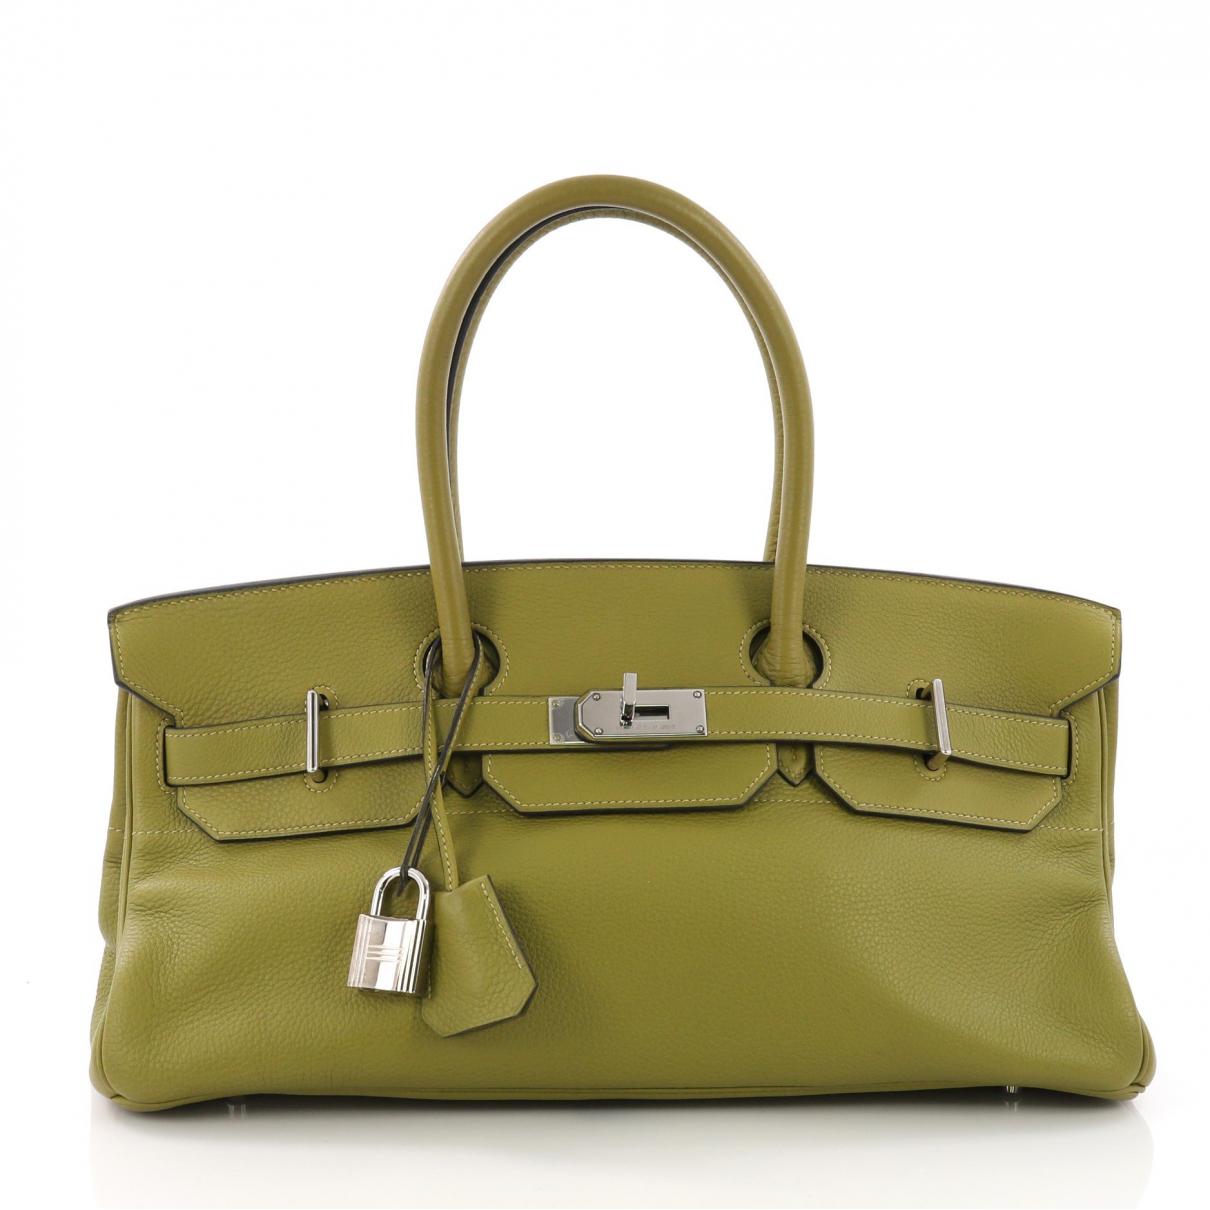 Lyst Herm s Birkin  Shoulder Green  Leather Handbag  in Green 